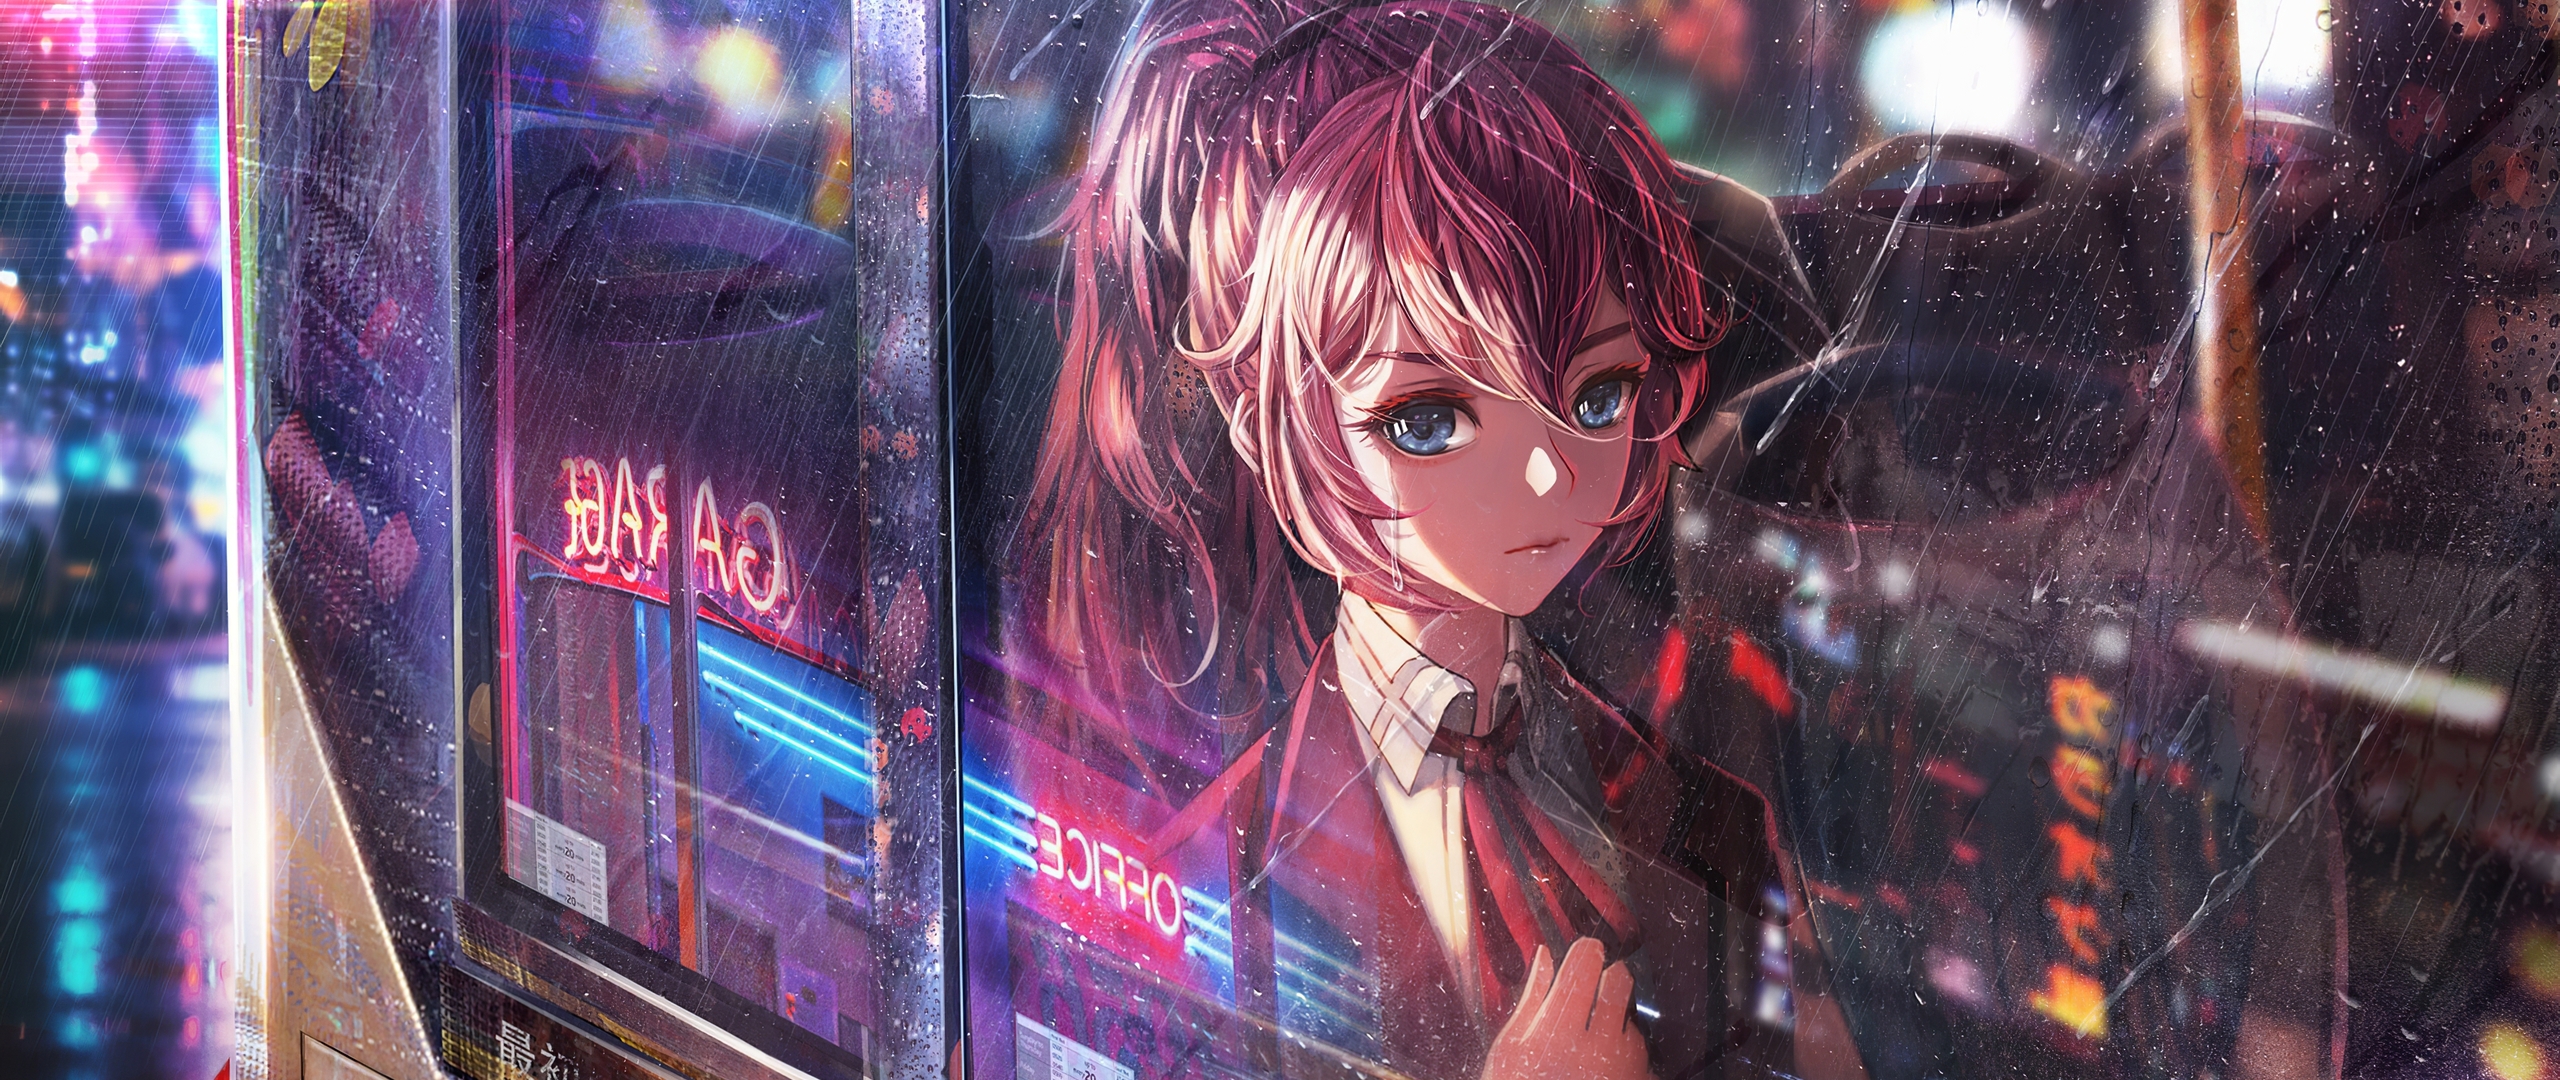 2560x1080 Anime Girl Bus Window Neon City 4k 2560x1080 Resolution